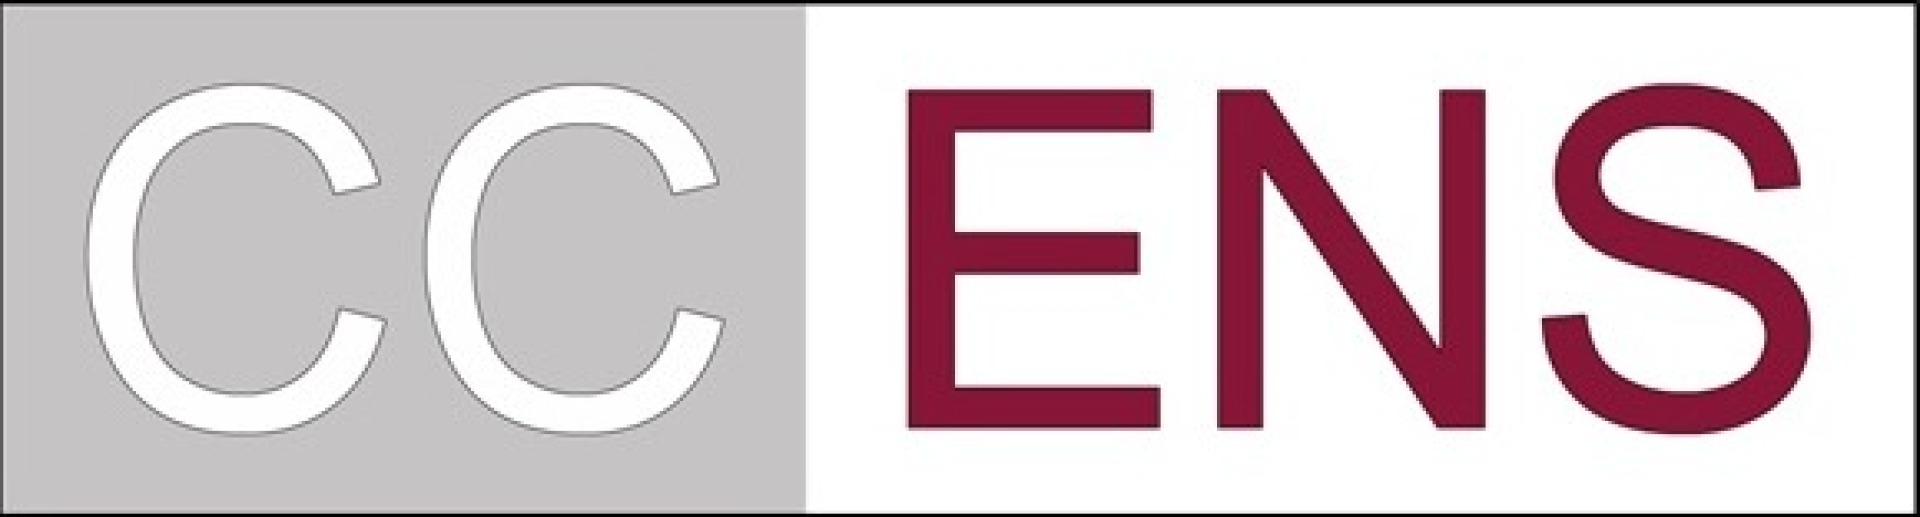 CCENS Logo